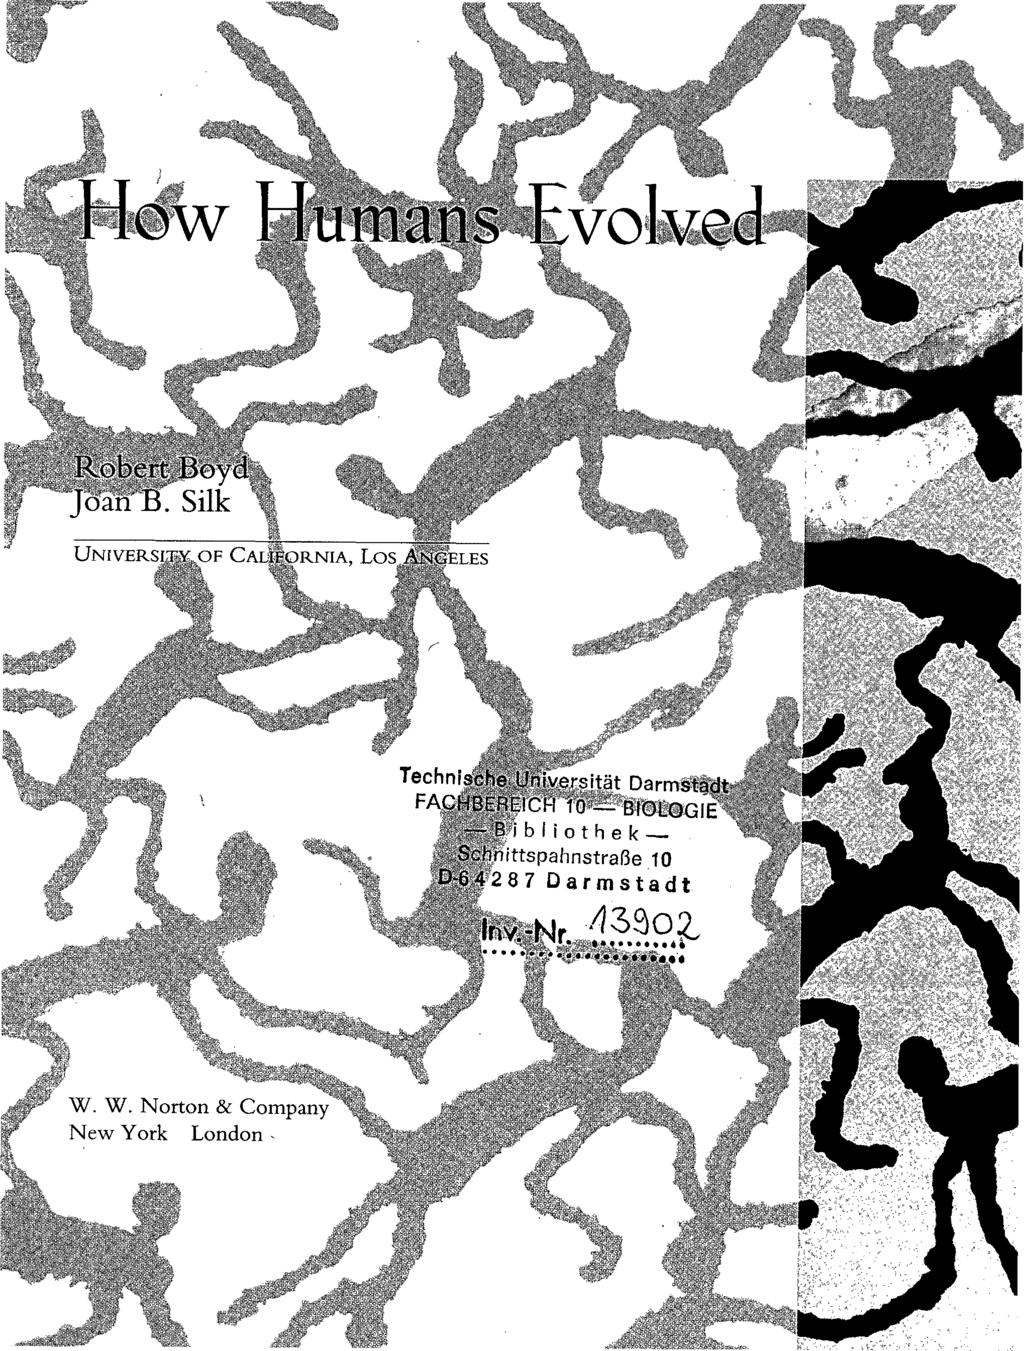 1 low Humans Evolved Robert Howl IOIIIB Silk UNIVERS1. i 1 \..UK I.